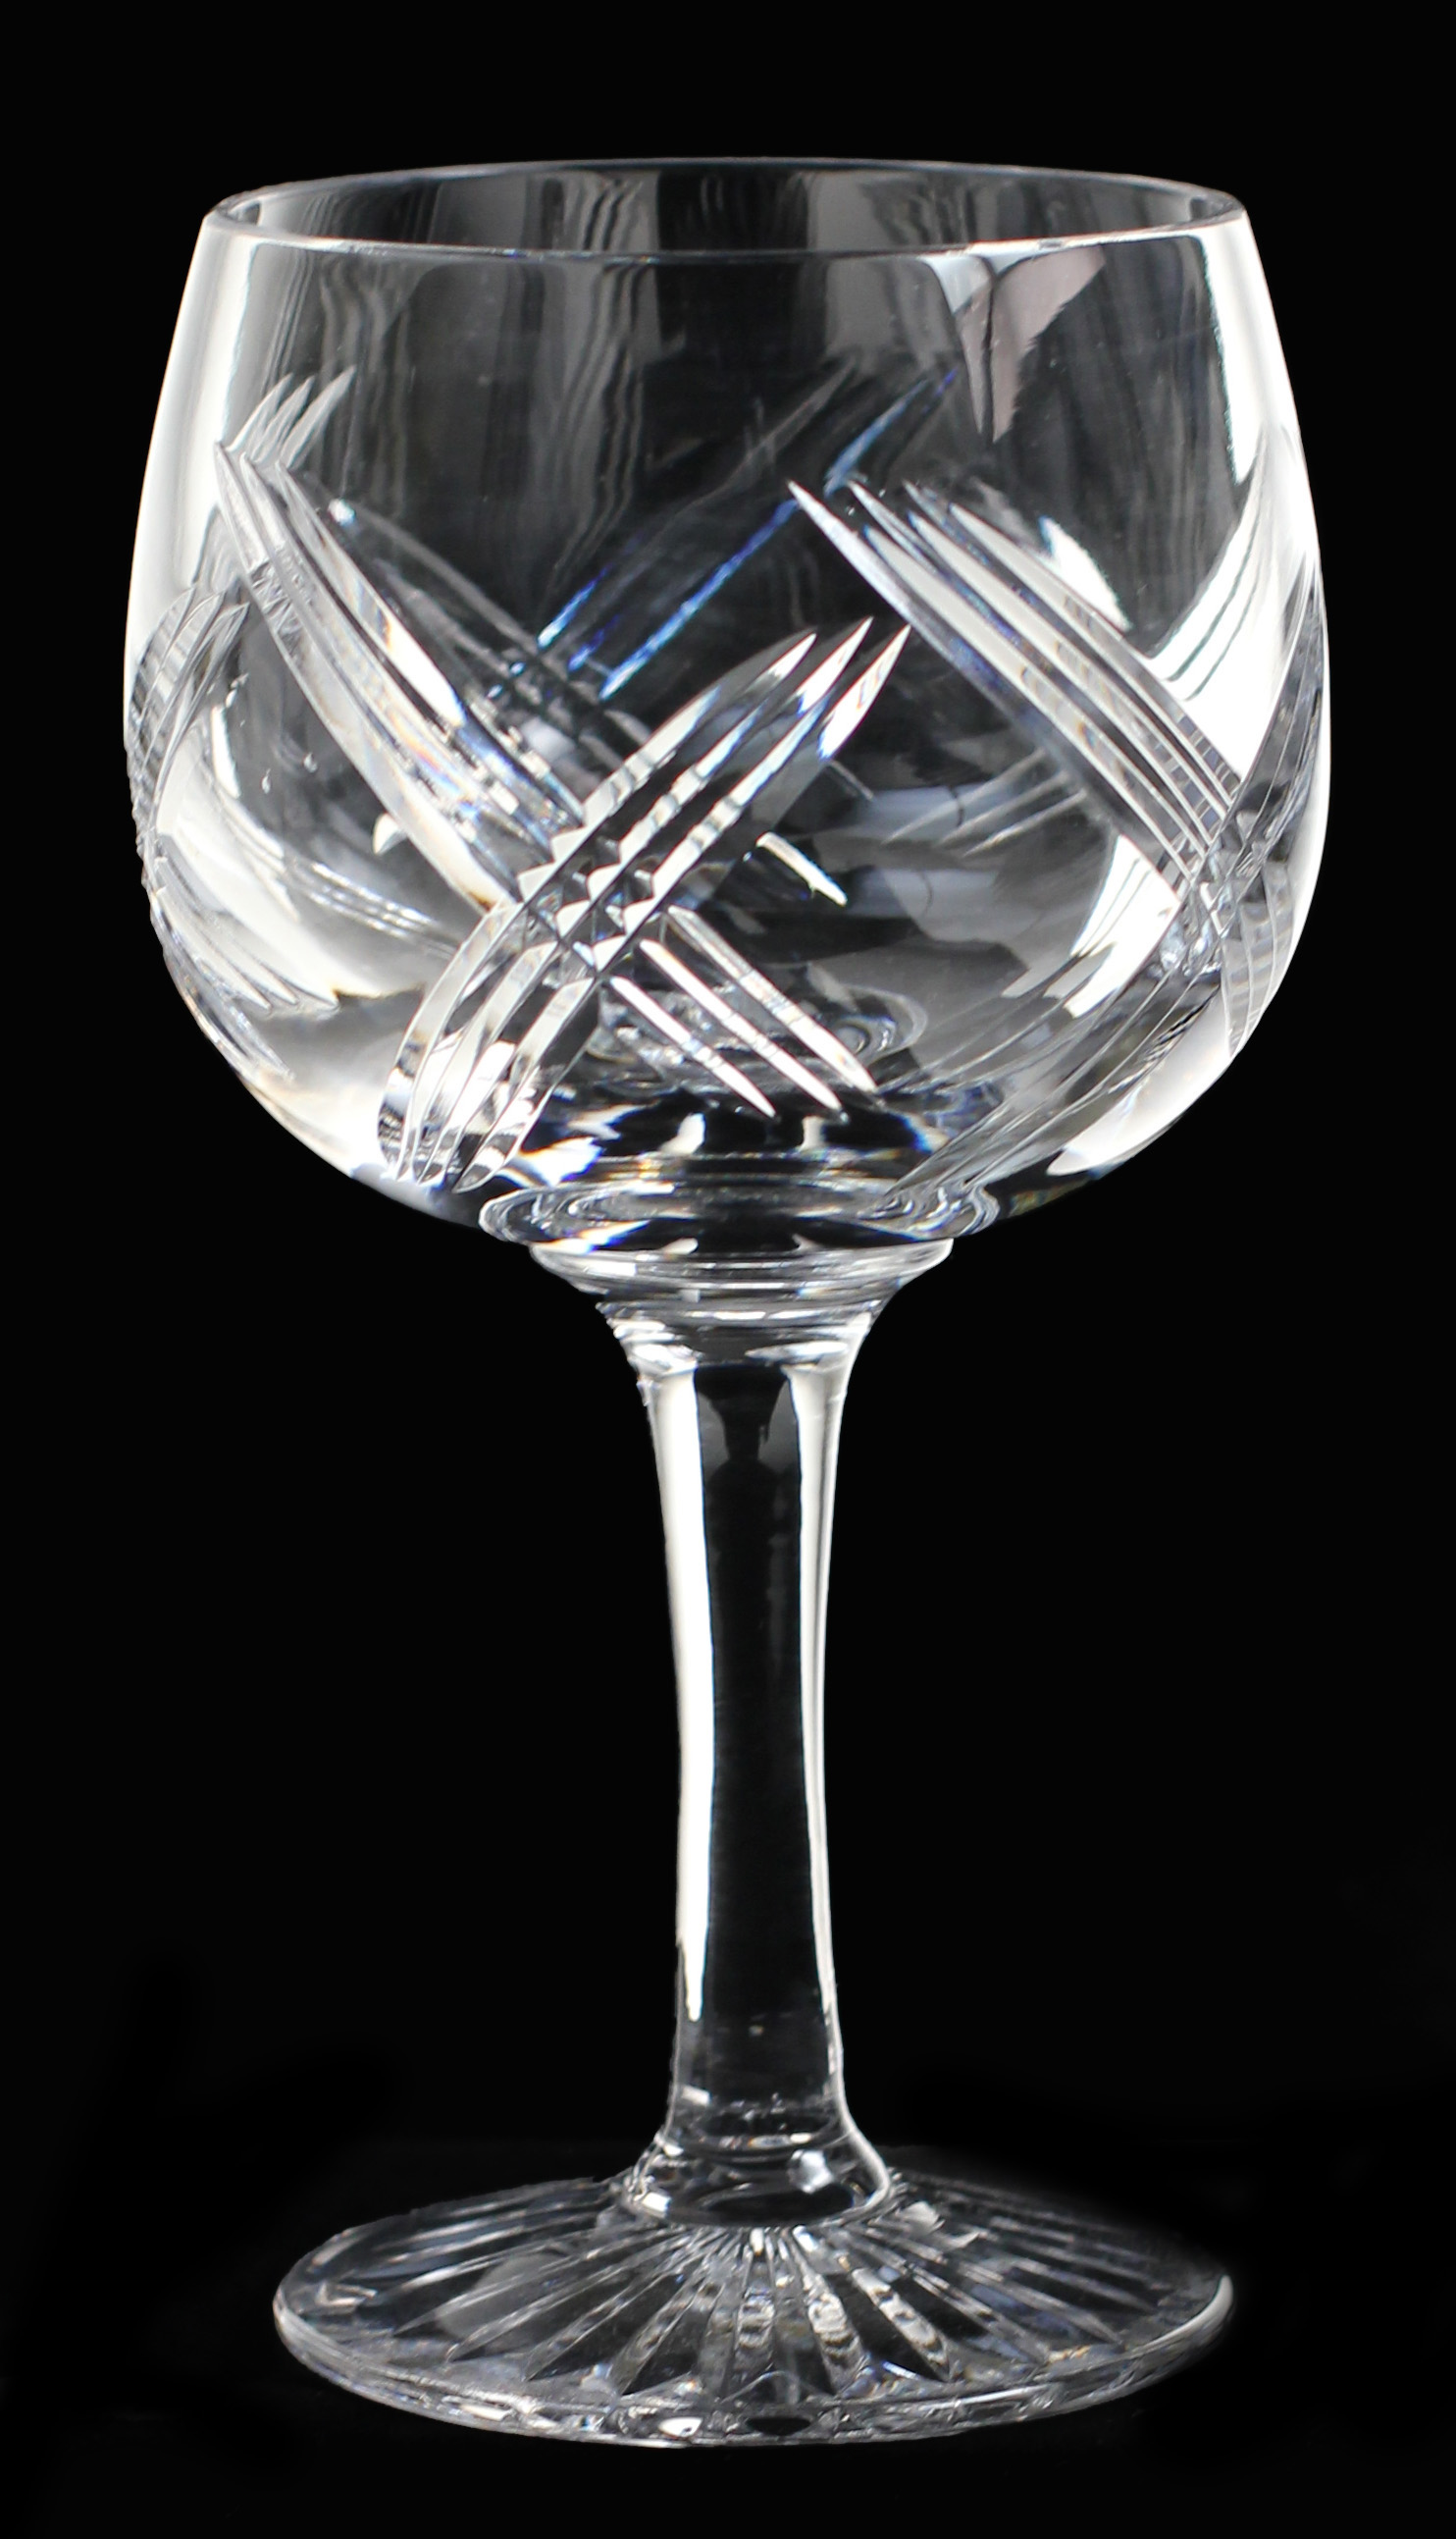 Brierley hill crystal Our elegant gin glass. Hand cut in Celebration design